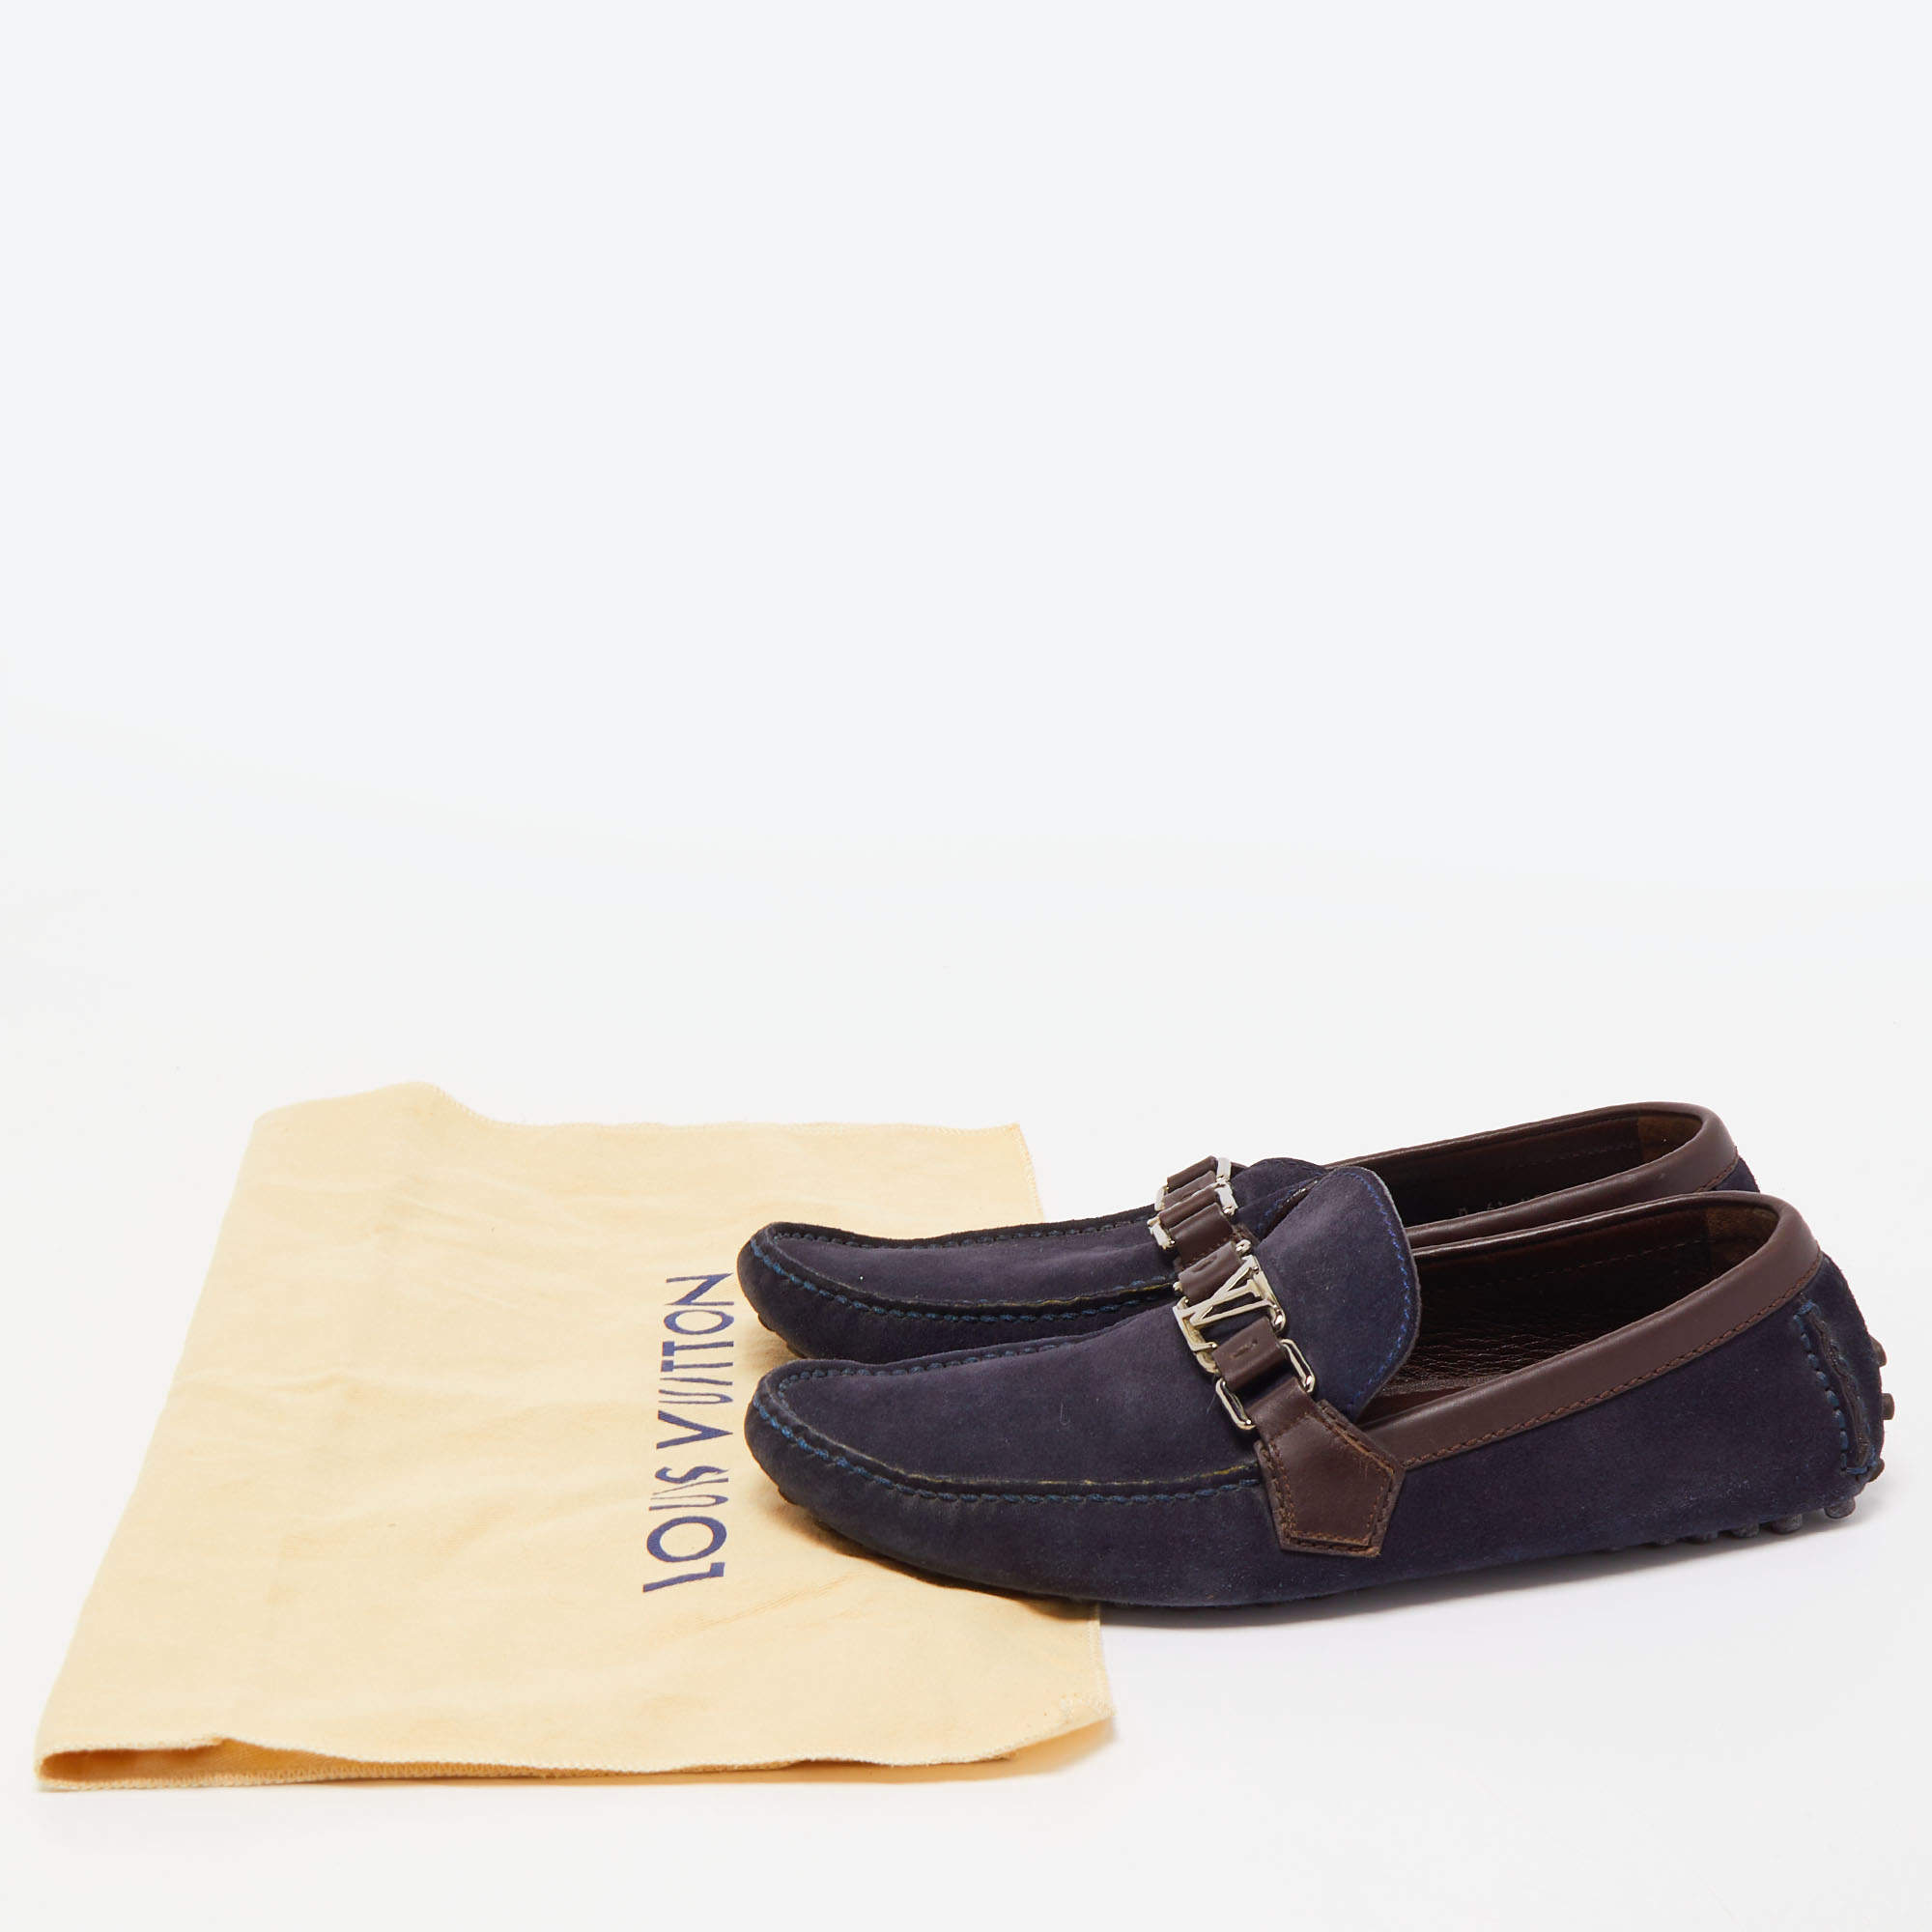 Louis Vuitton men Loafers in blue suede // Model: Hockenheim // Size: 10 //  New